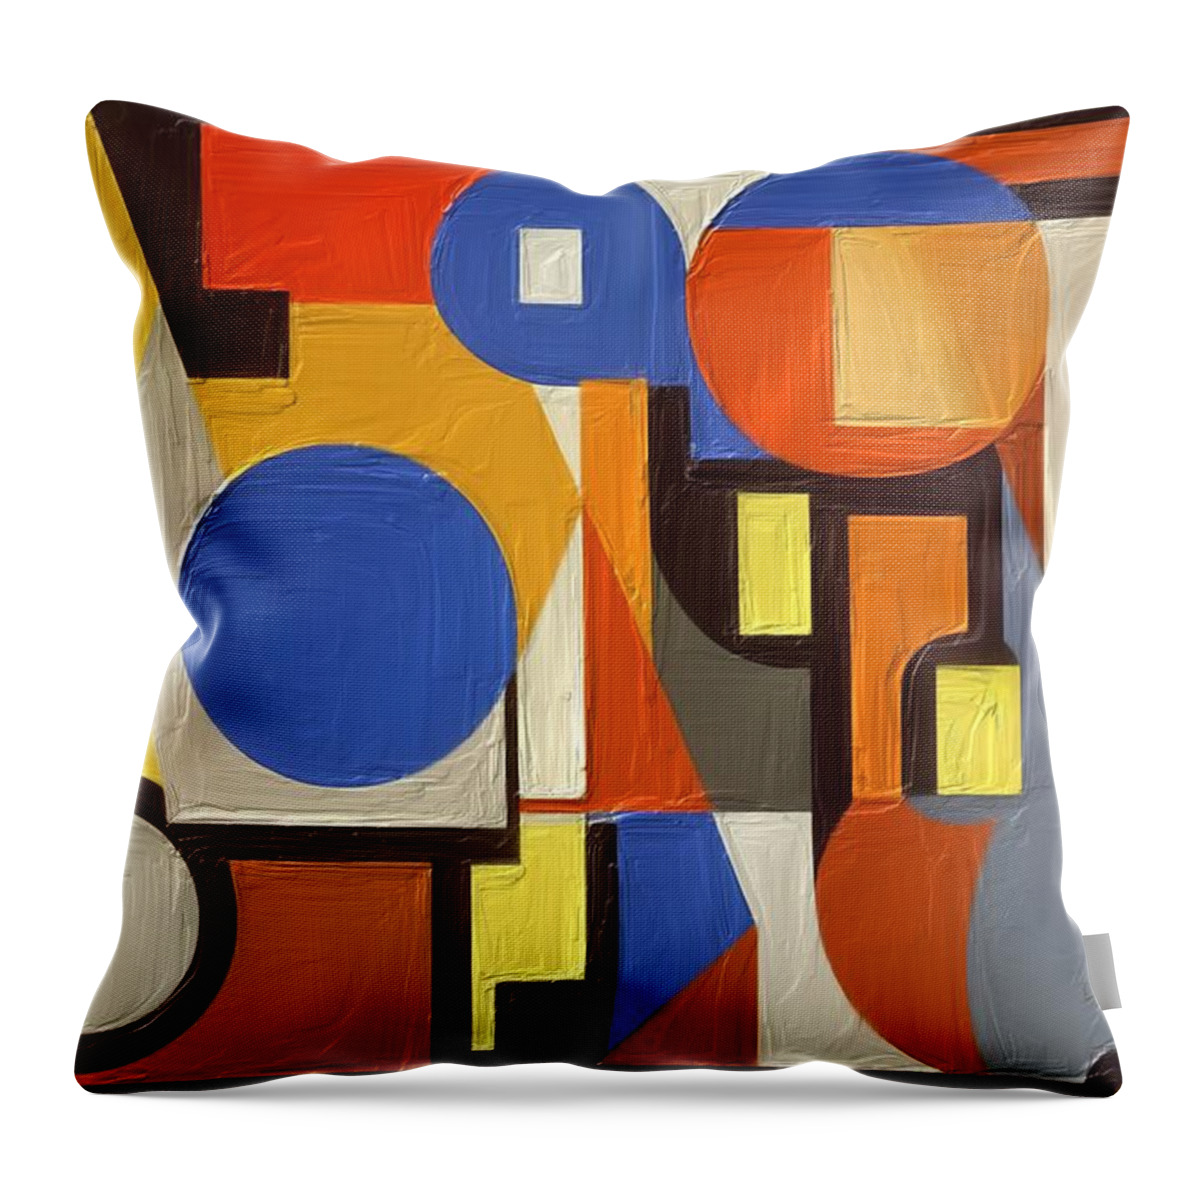 Geometric Throw Pillow featuring the digital art Abstract 12 by David Luebbert